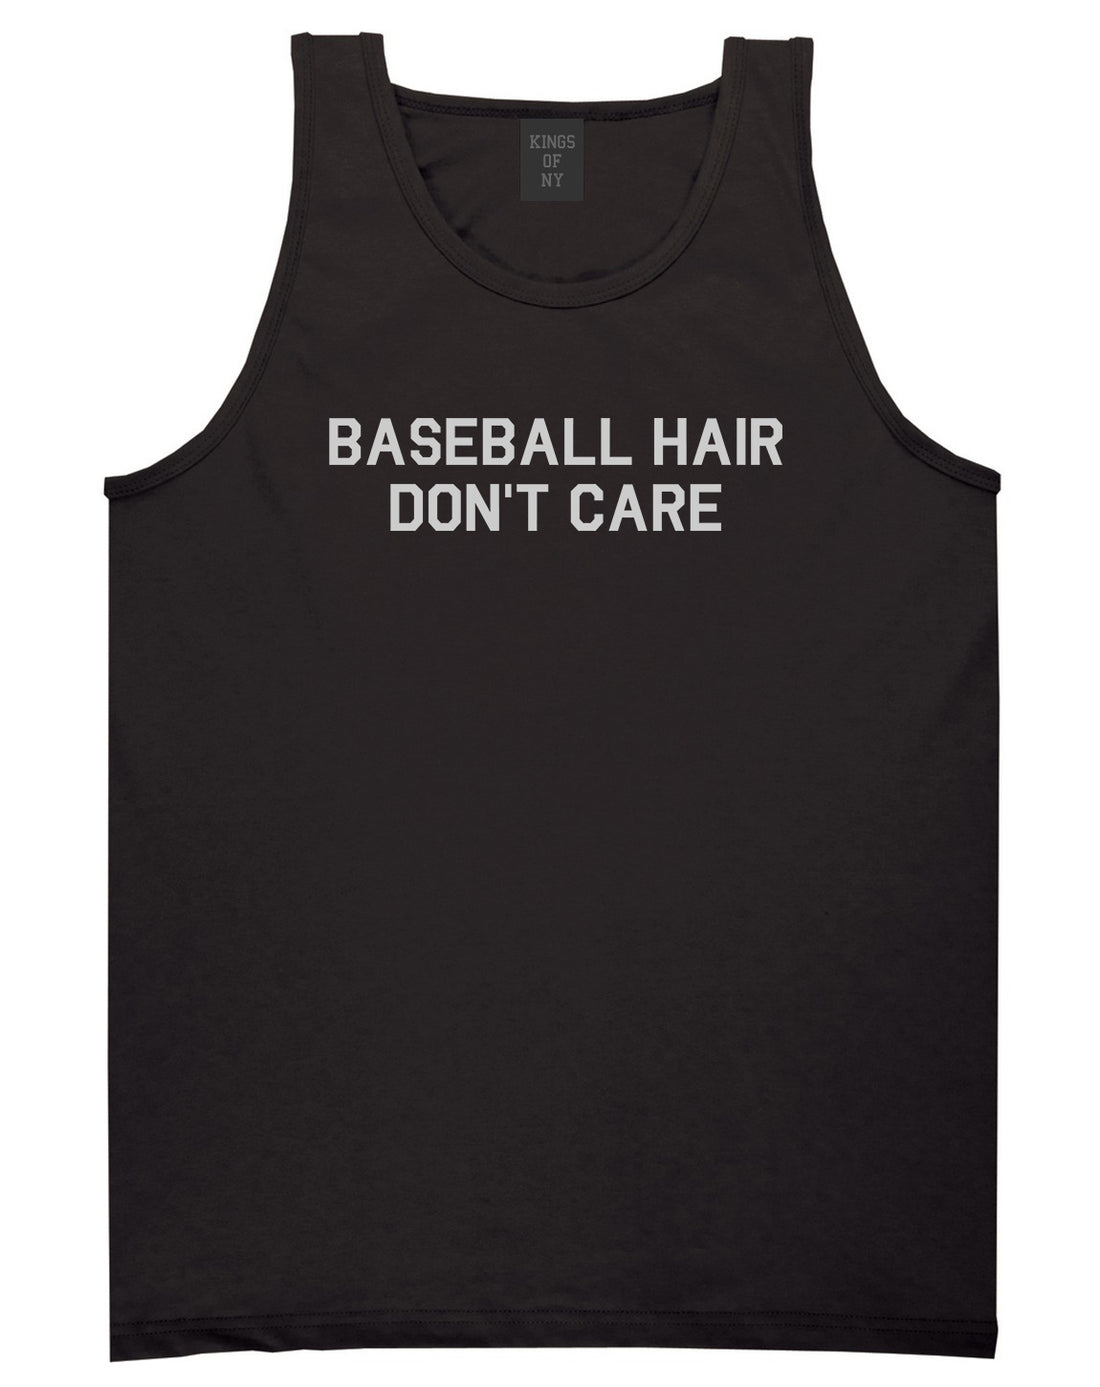 Baseball Hair Dont Care Black Tank Top Shirt by Kings Of NY